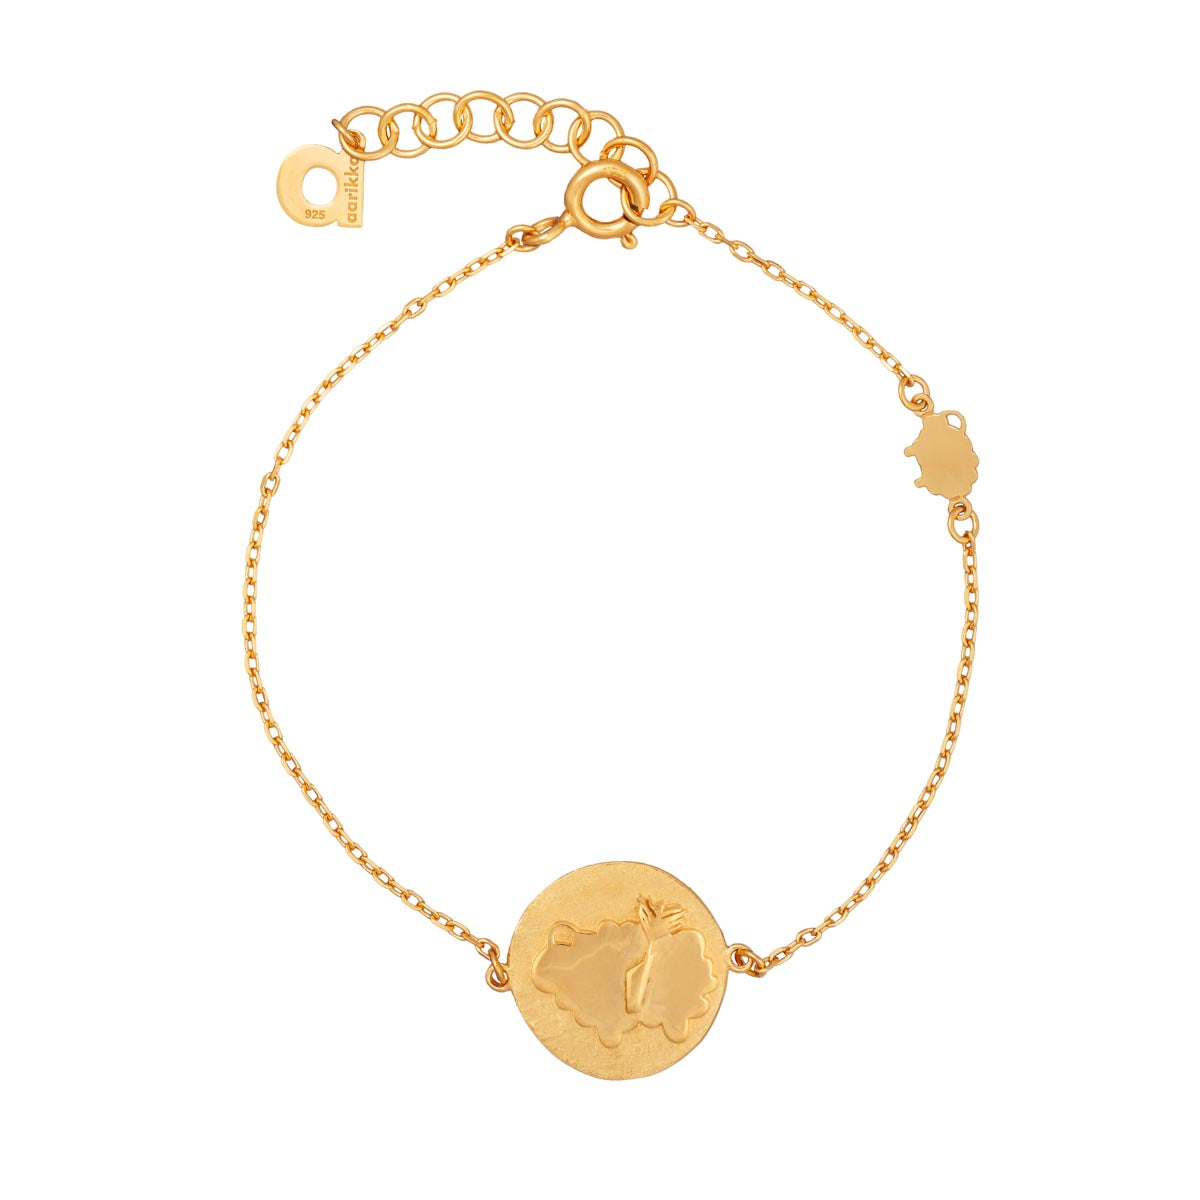 Sagittarius bracelet, gold-plated silver